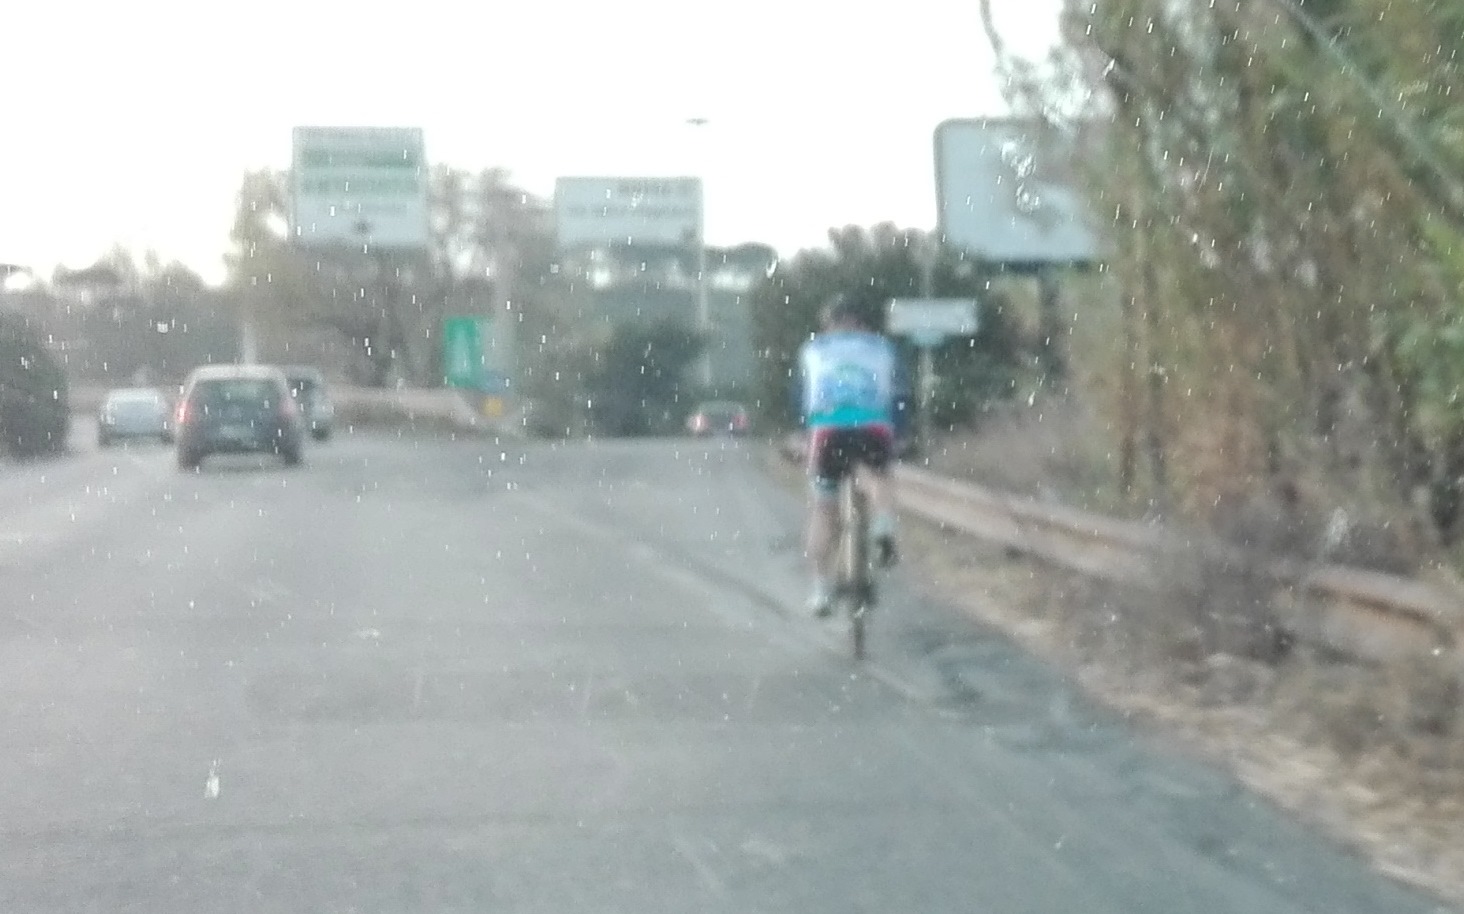 ciclista